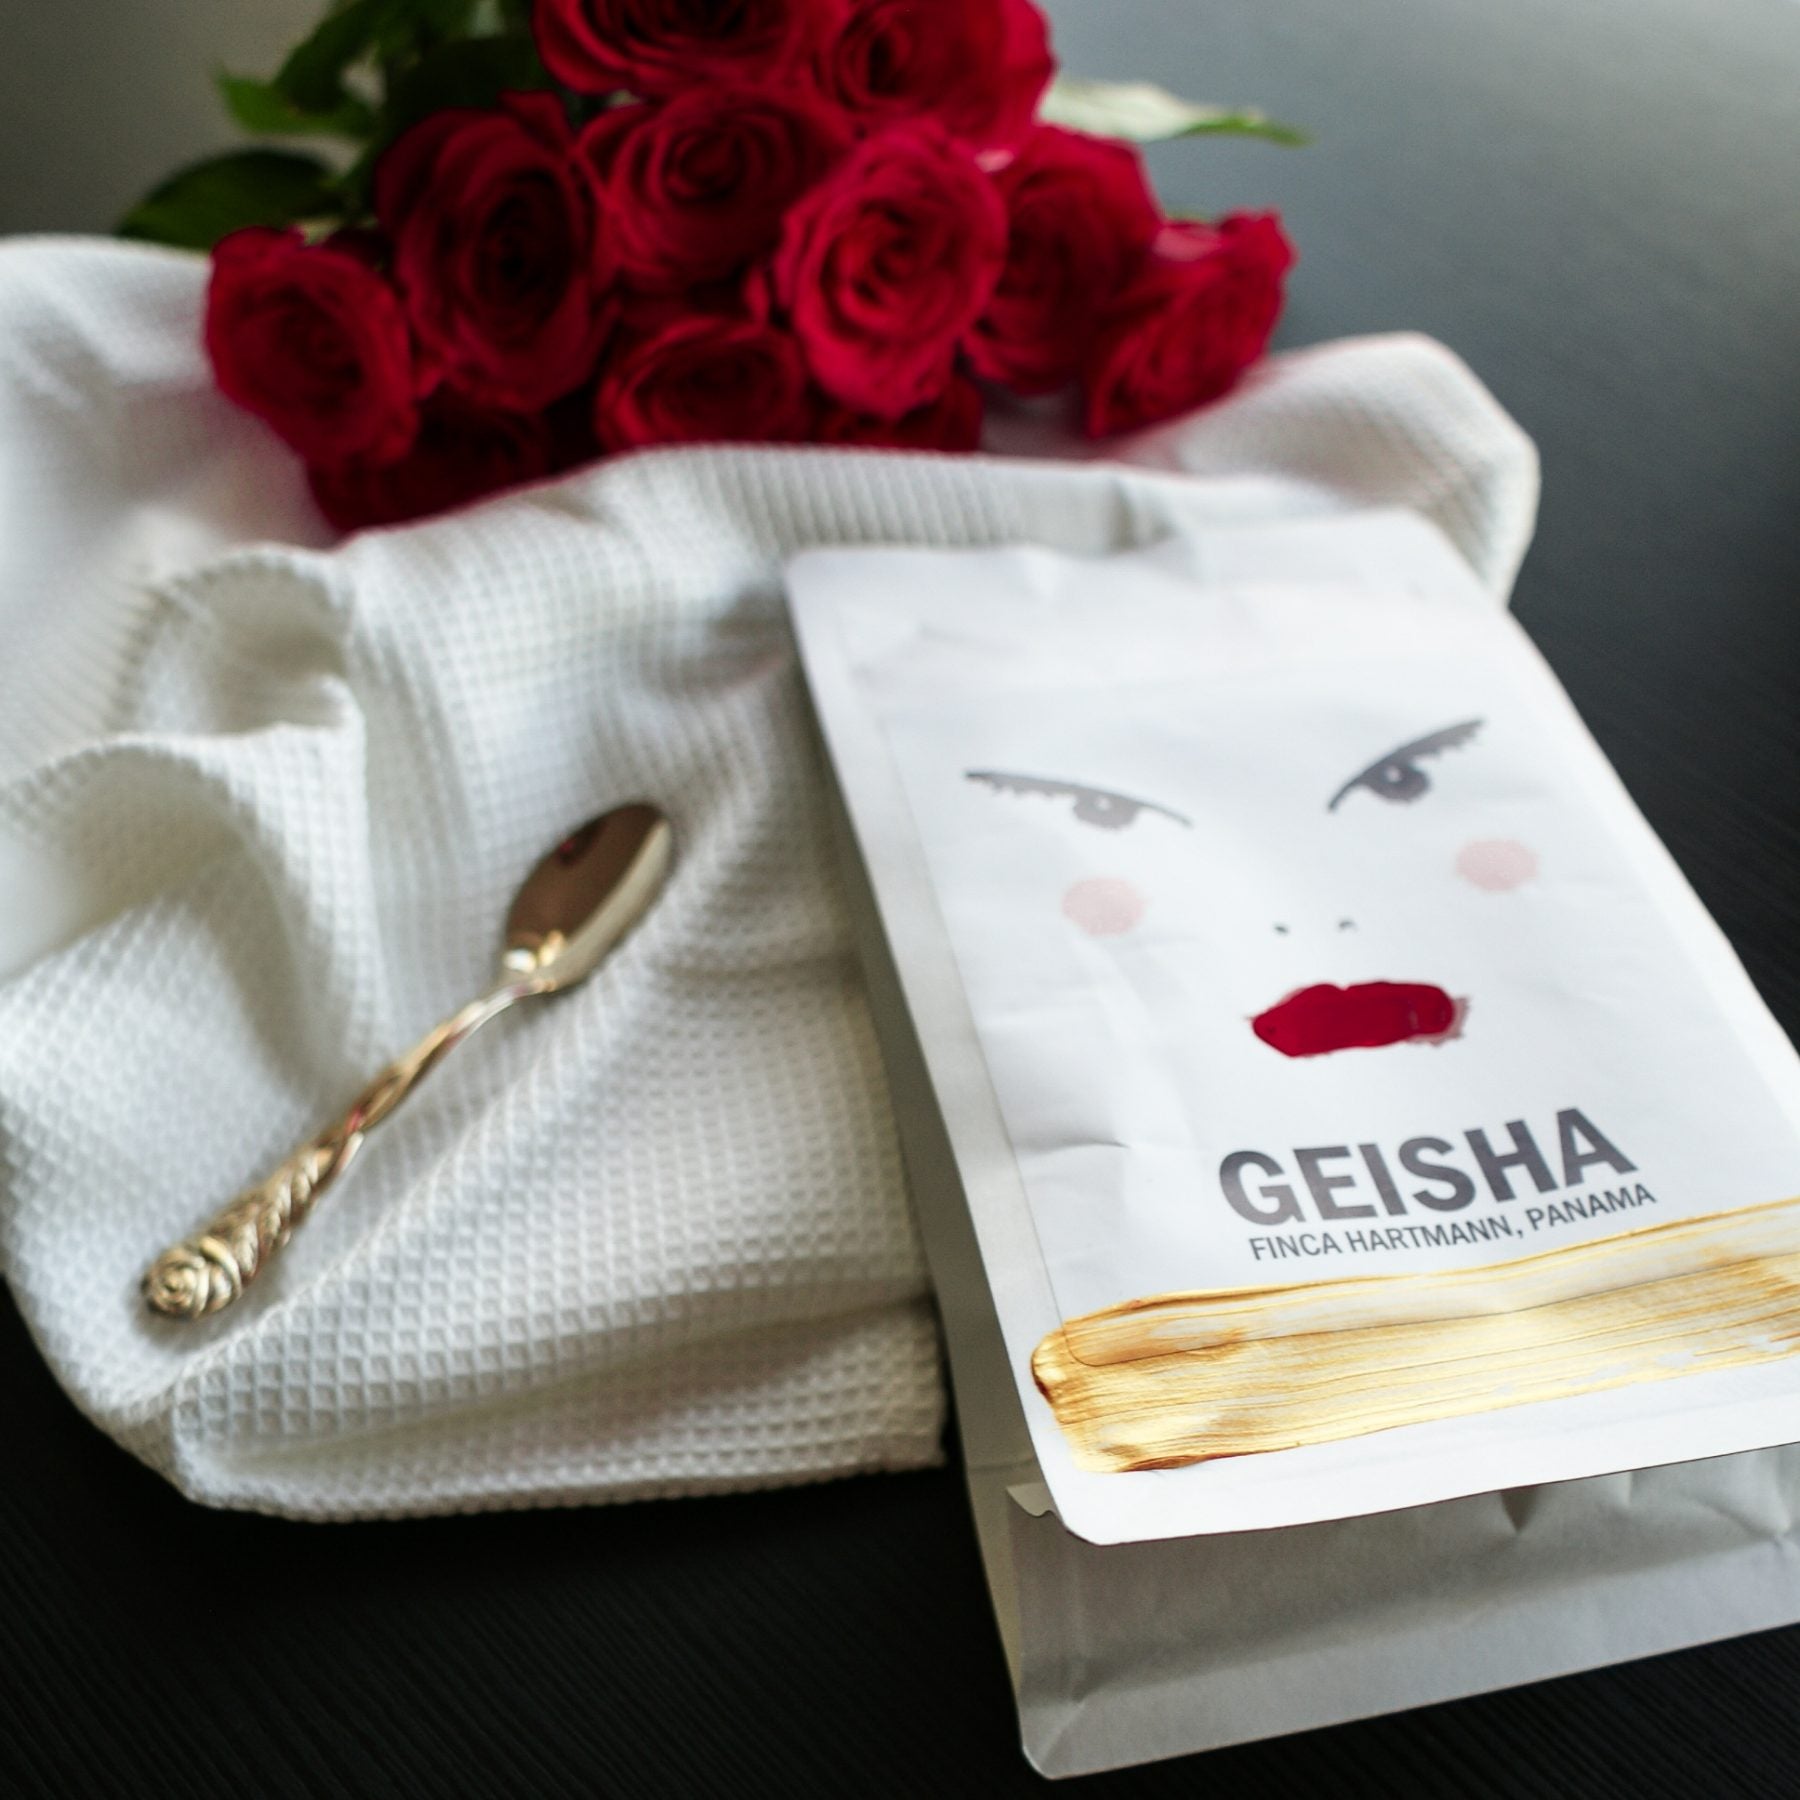 kawa - coffee plant - java coffee - geisha